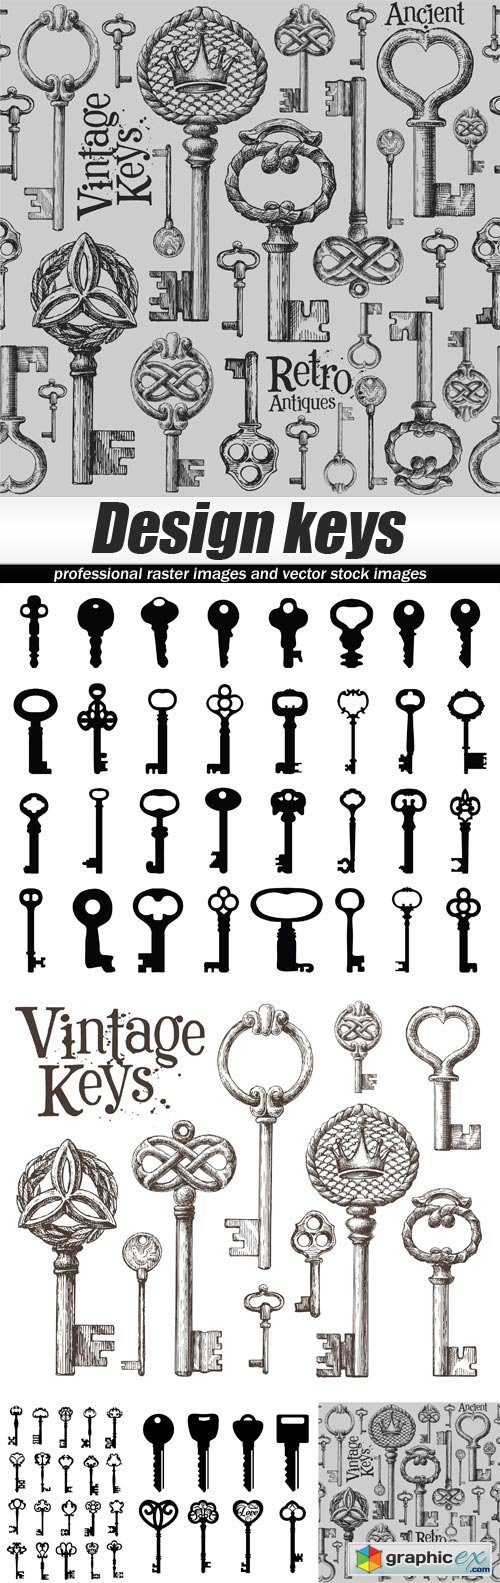 Design keys